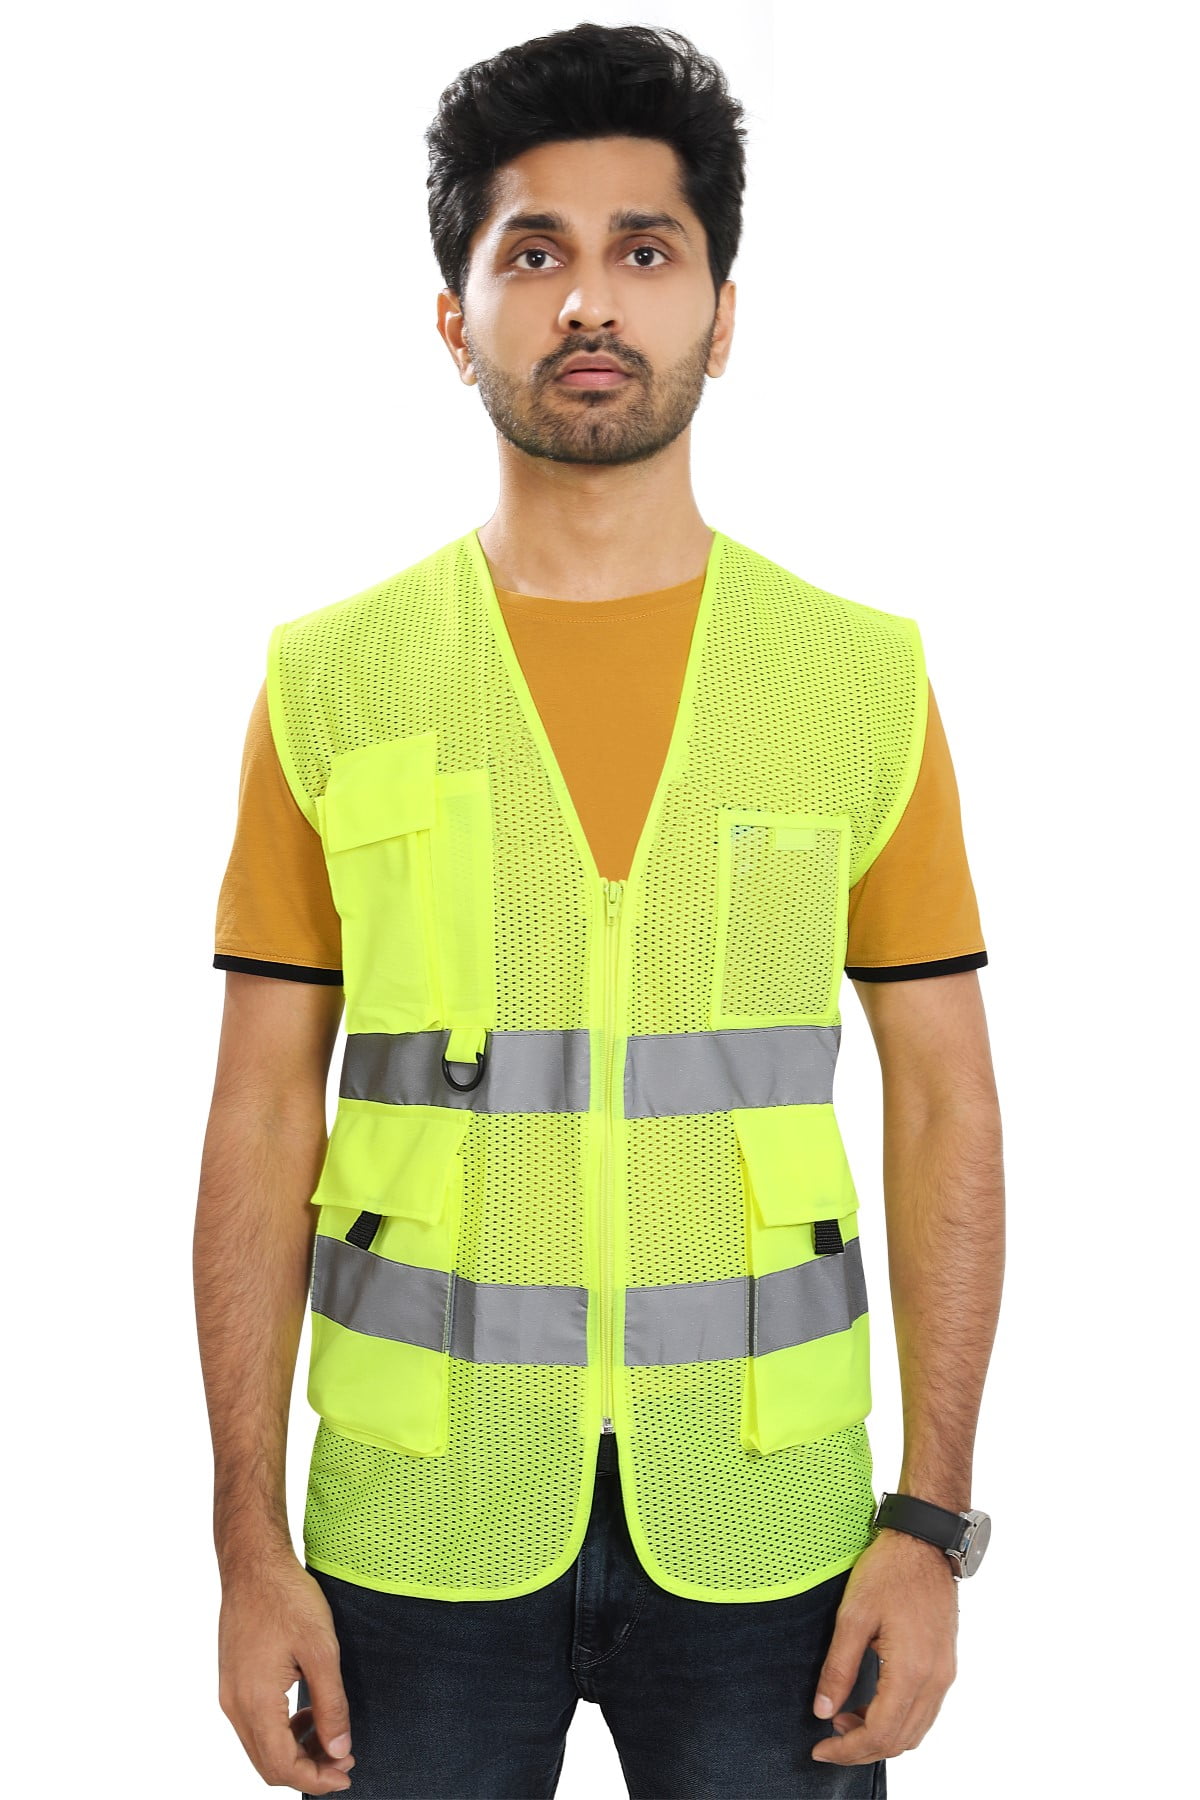 Shine| Reflective Safety Vest In India- ReflectoSafe